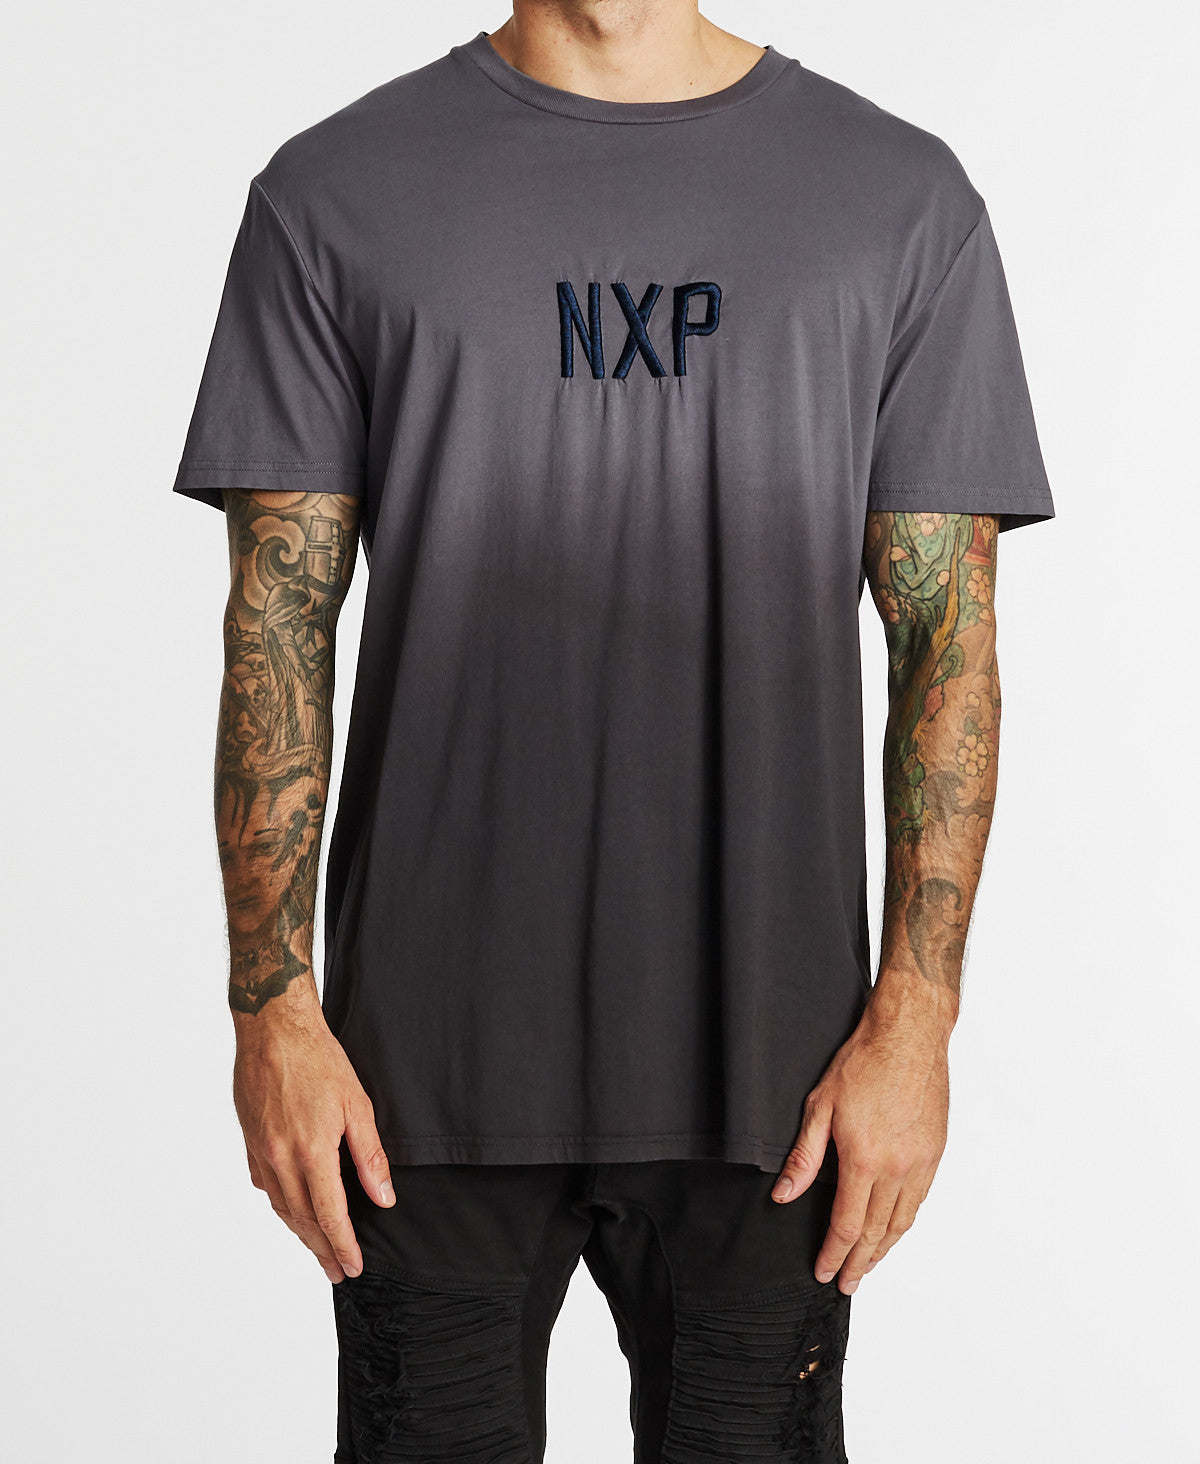 NXP Faded Tee